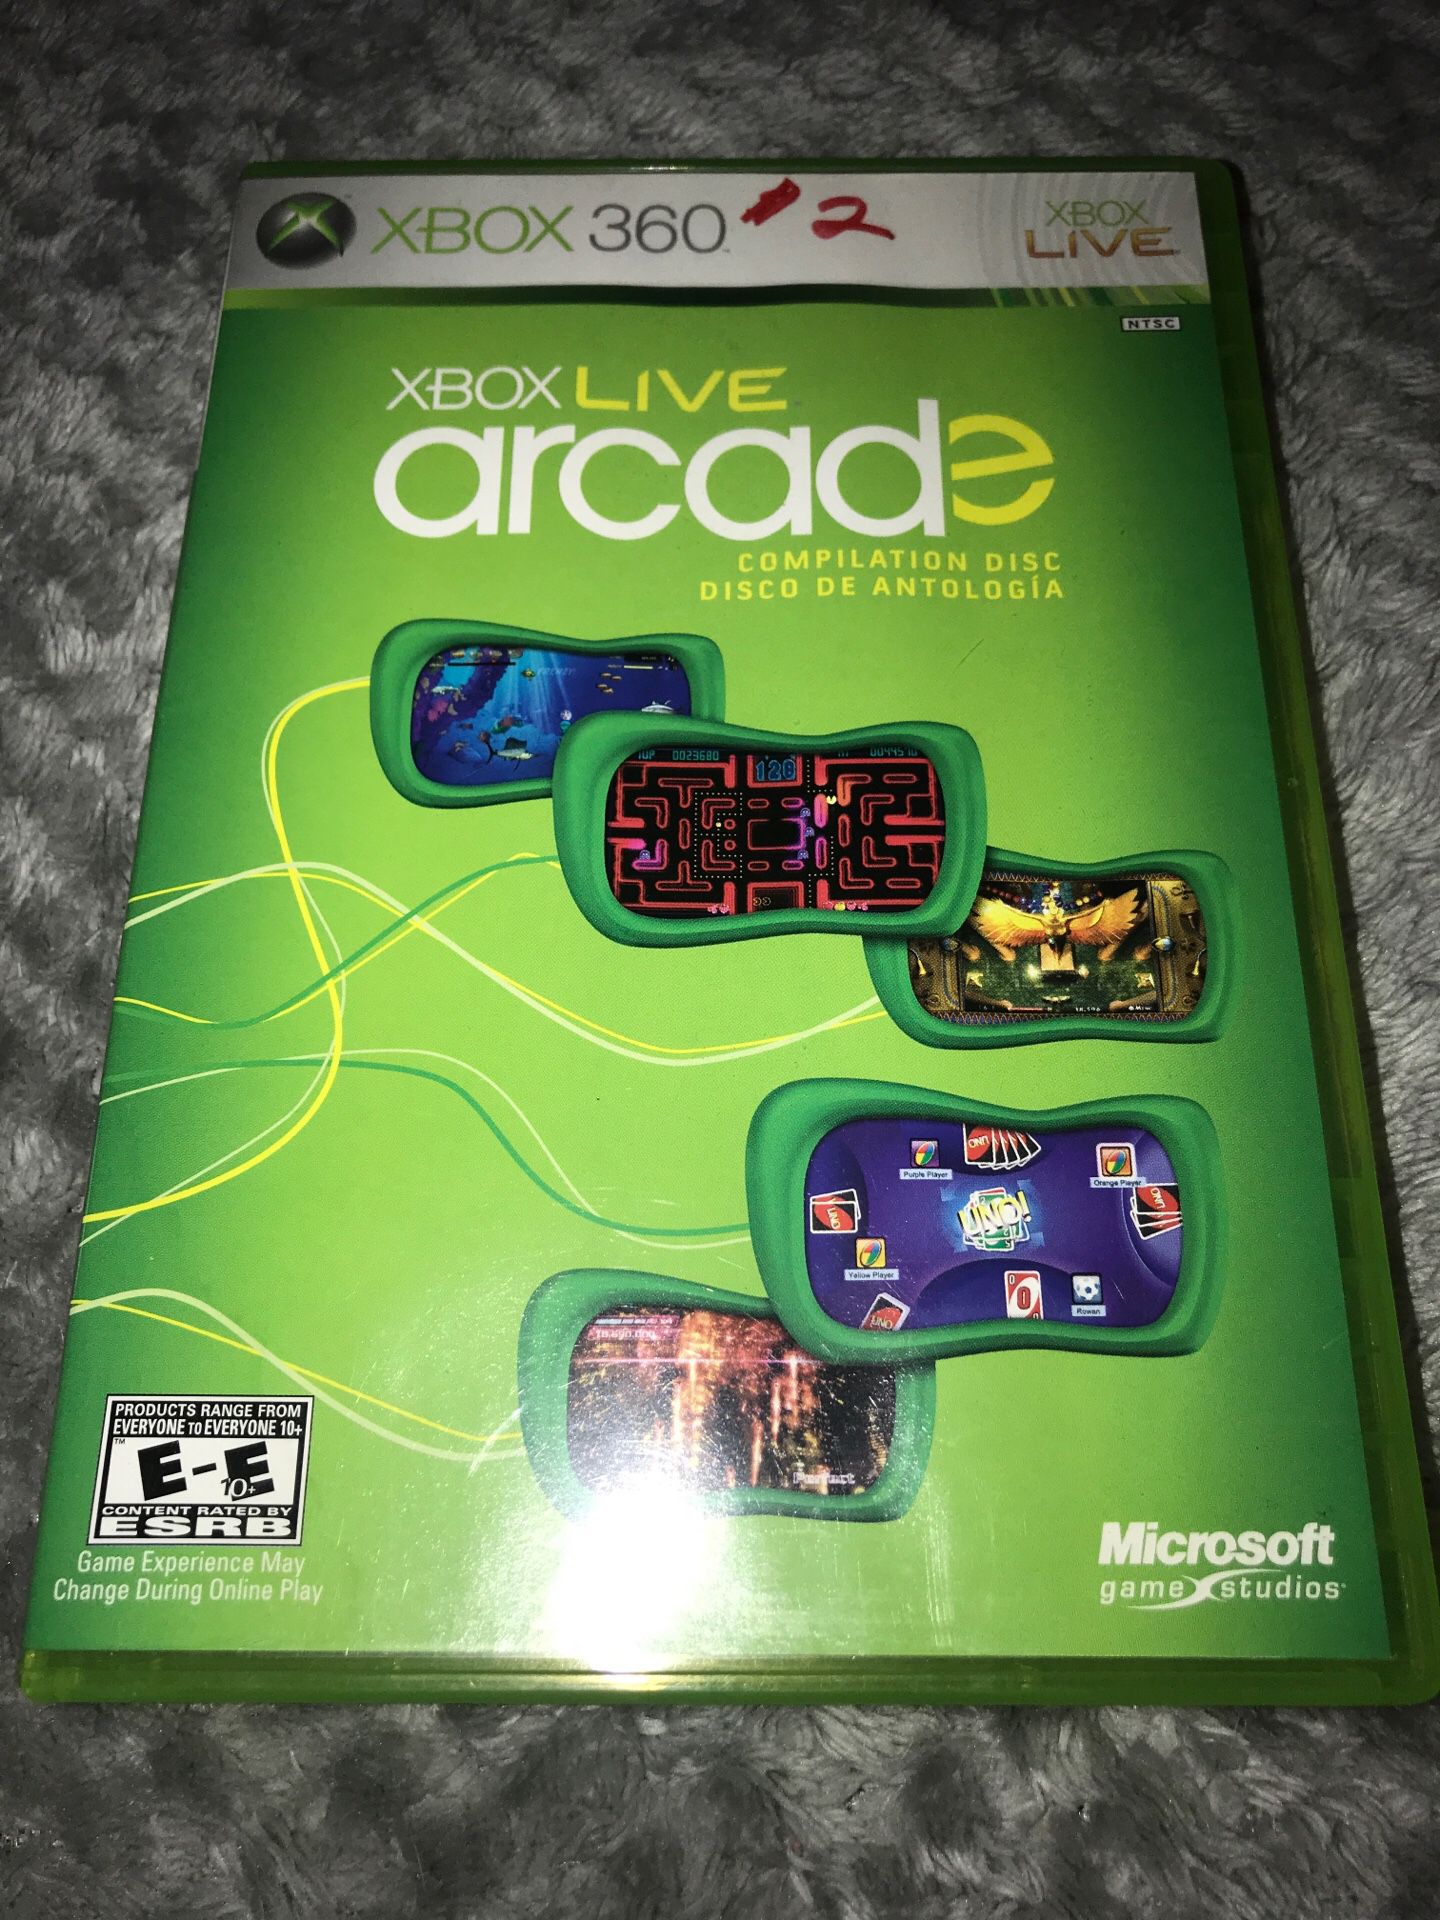 Xbox 360 Live Arcade CD Disk